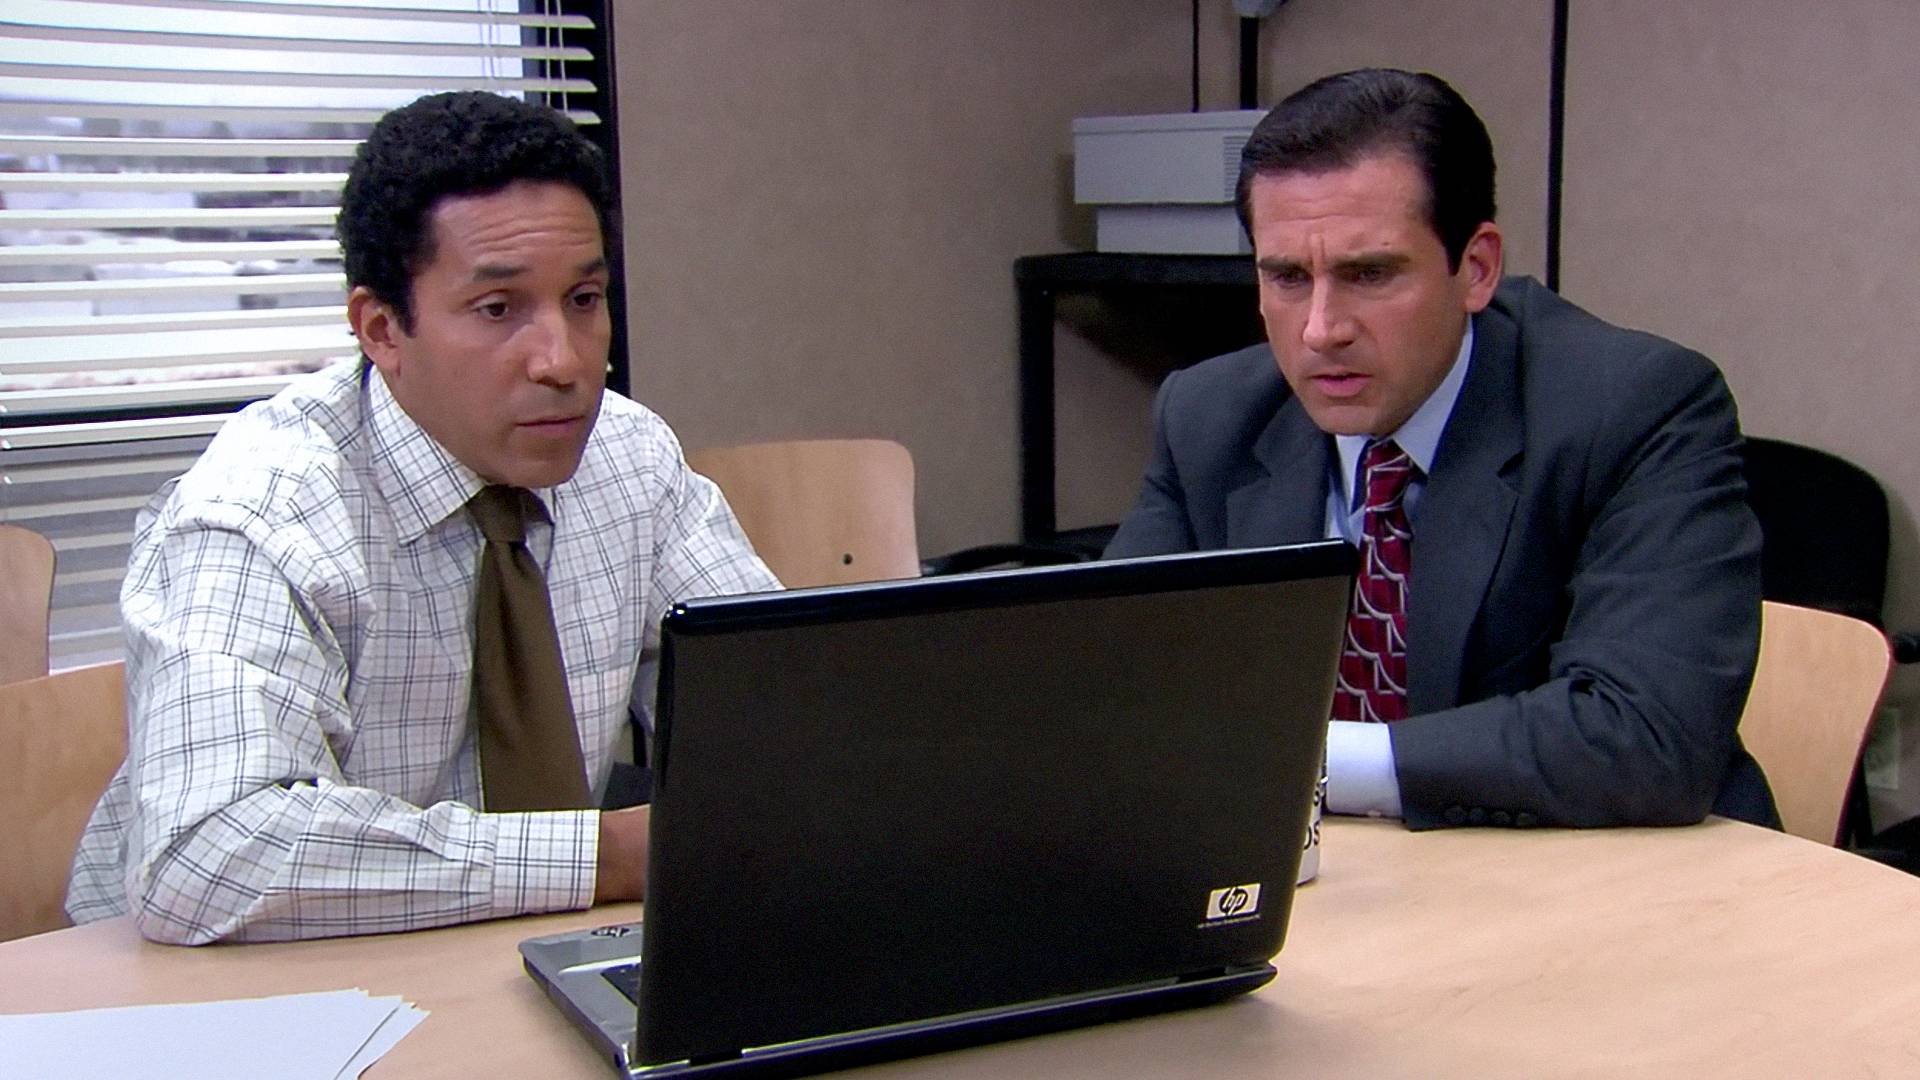 The Office Season 4 Episode 8